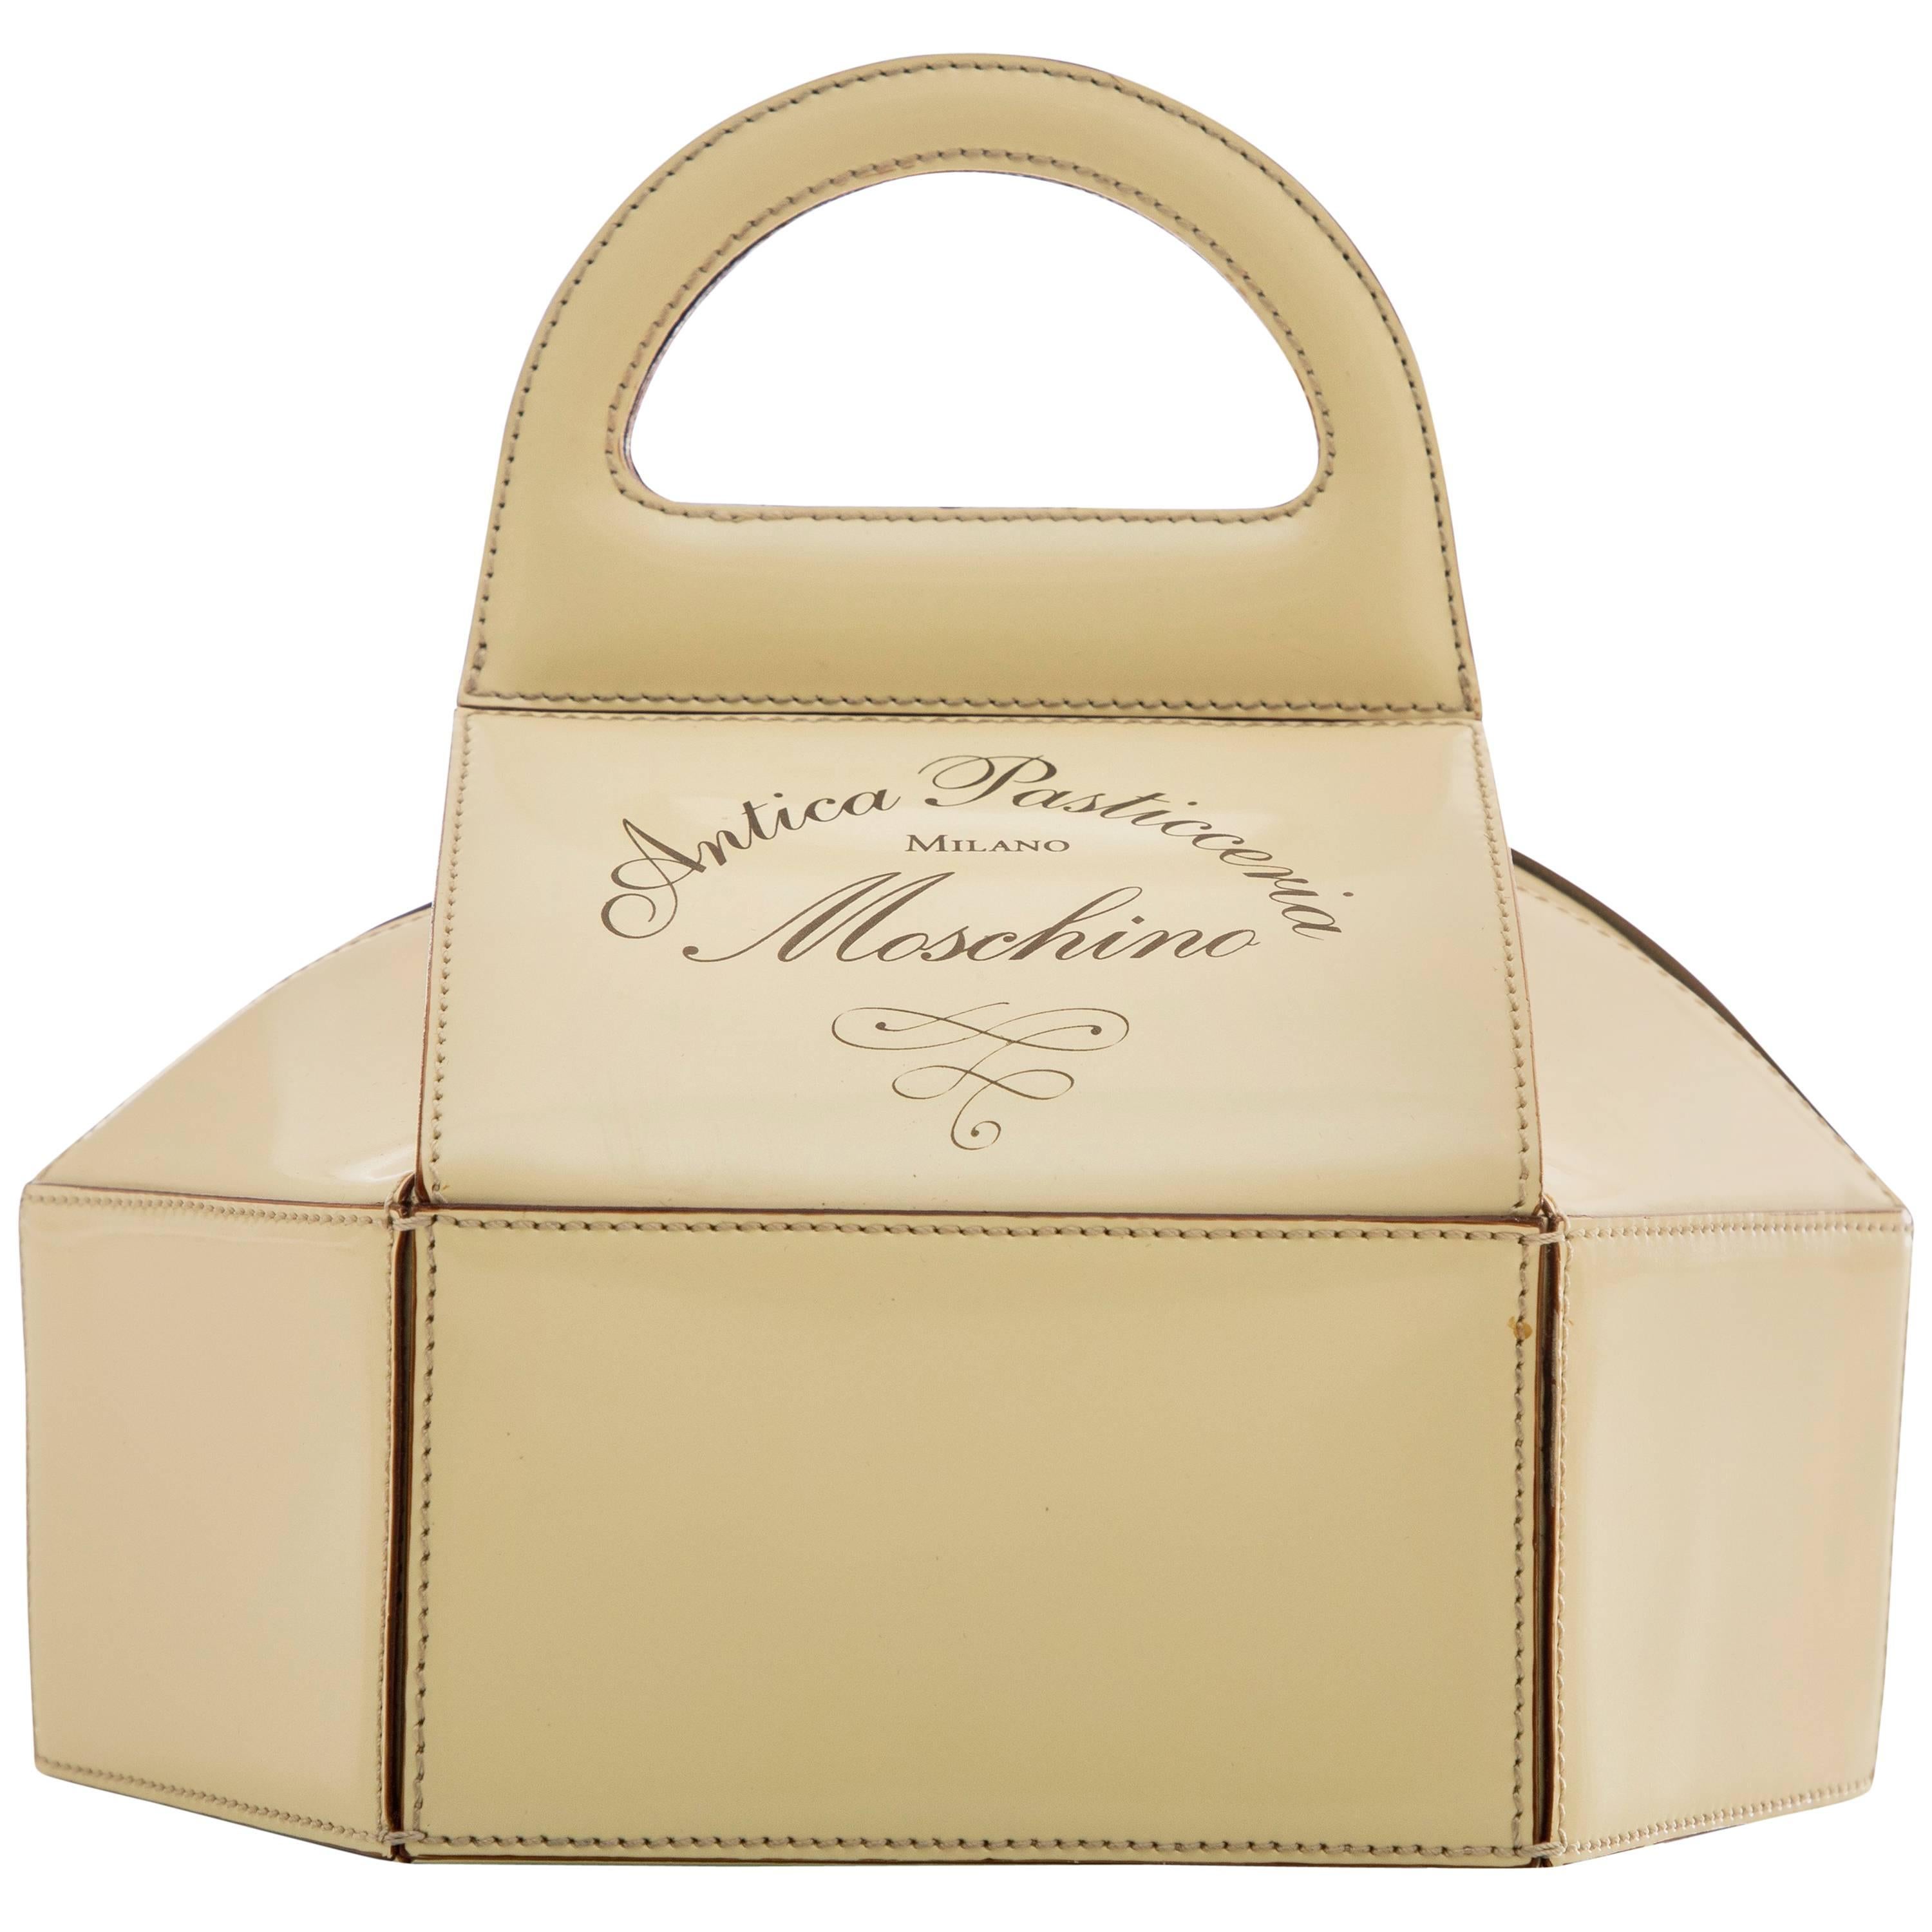 Moschino Antica Pasticceria Milano Pastry Box Handbag